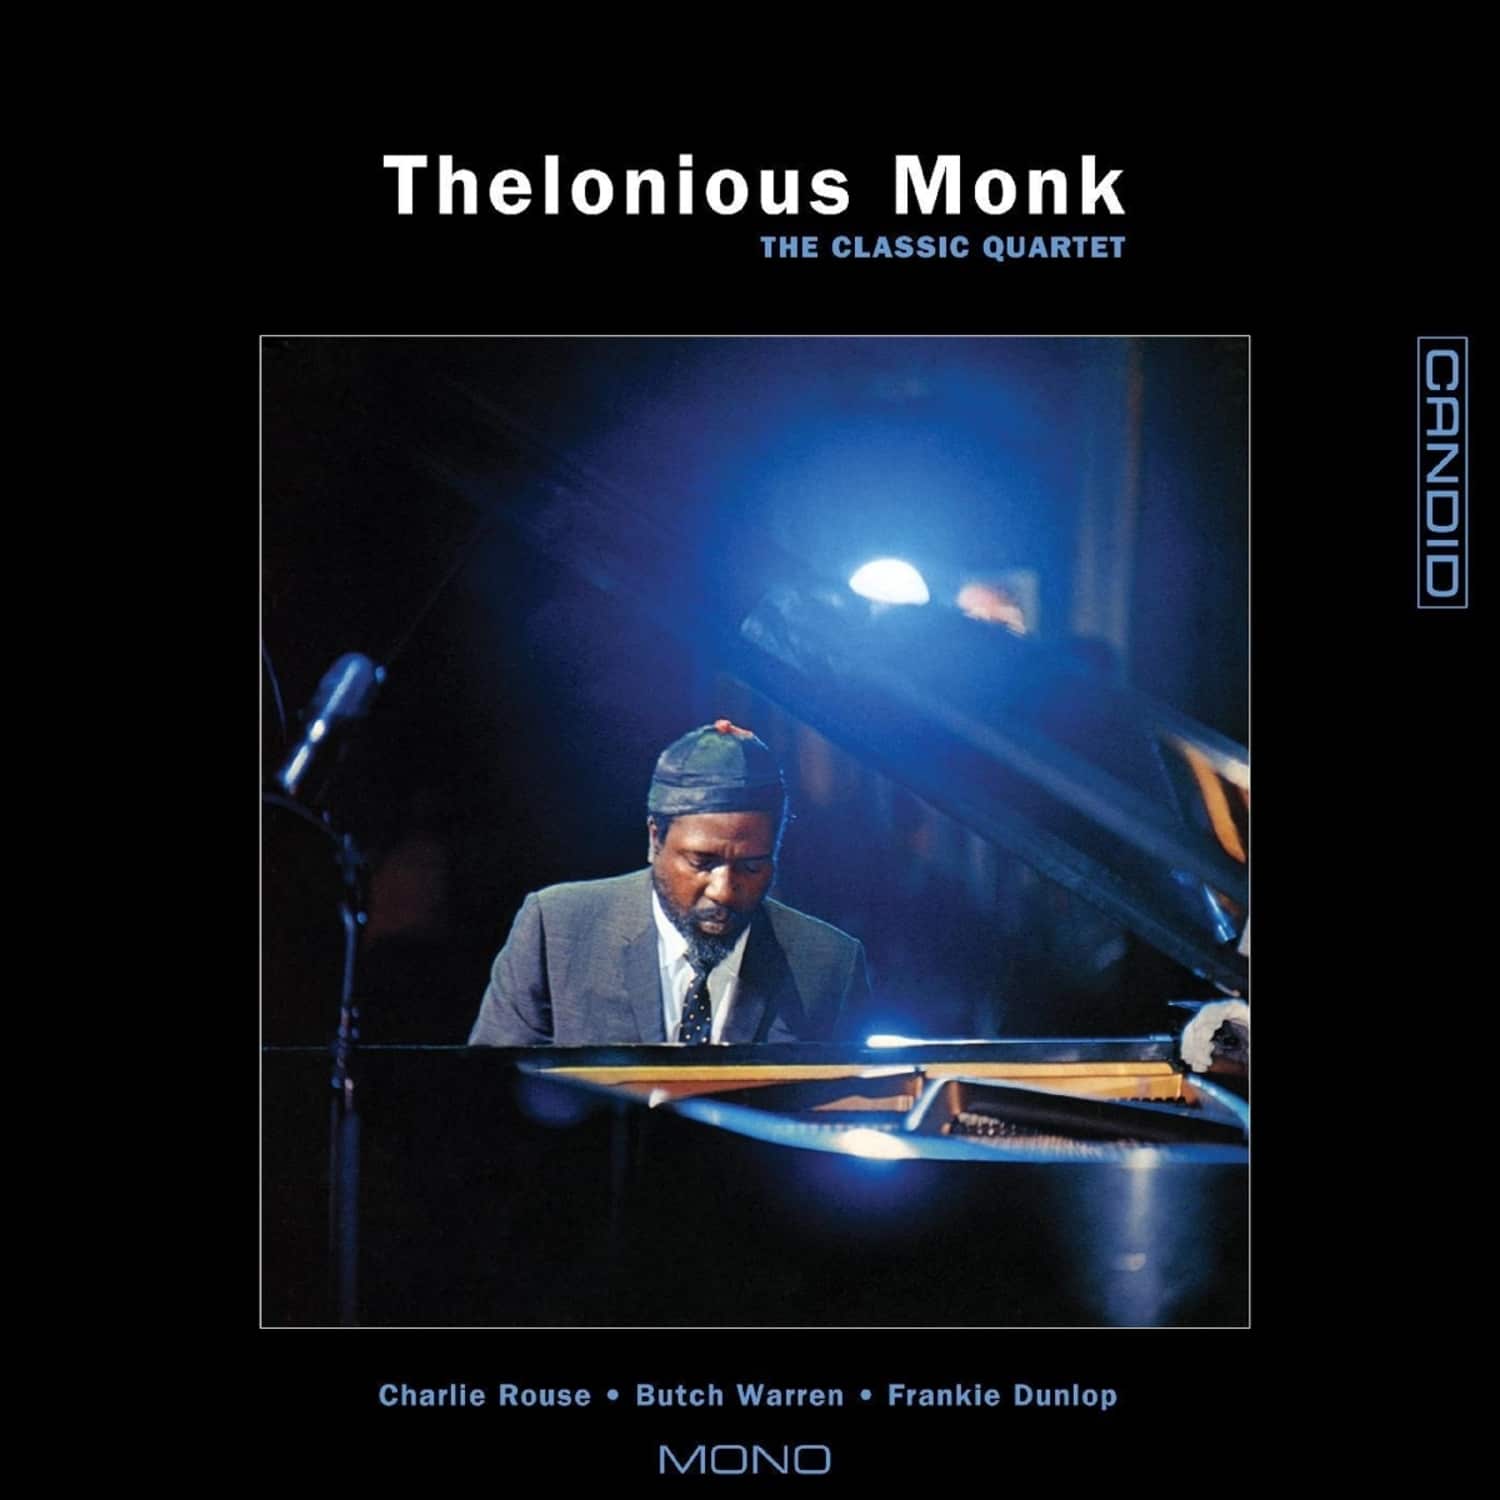  Thelonious Monk - CLASSIC QUARTET 